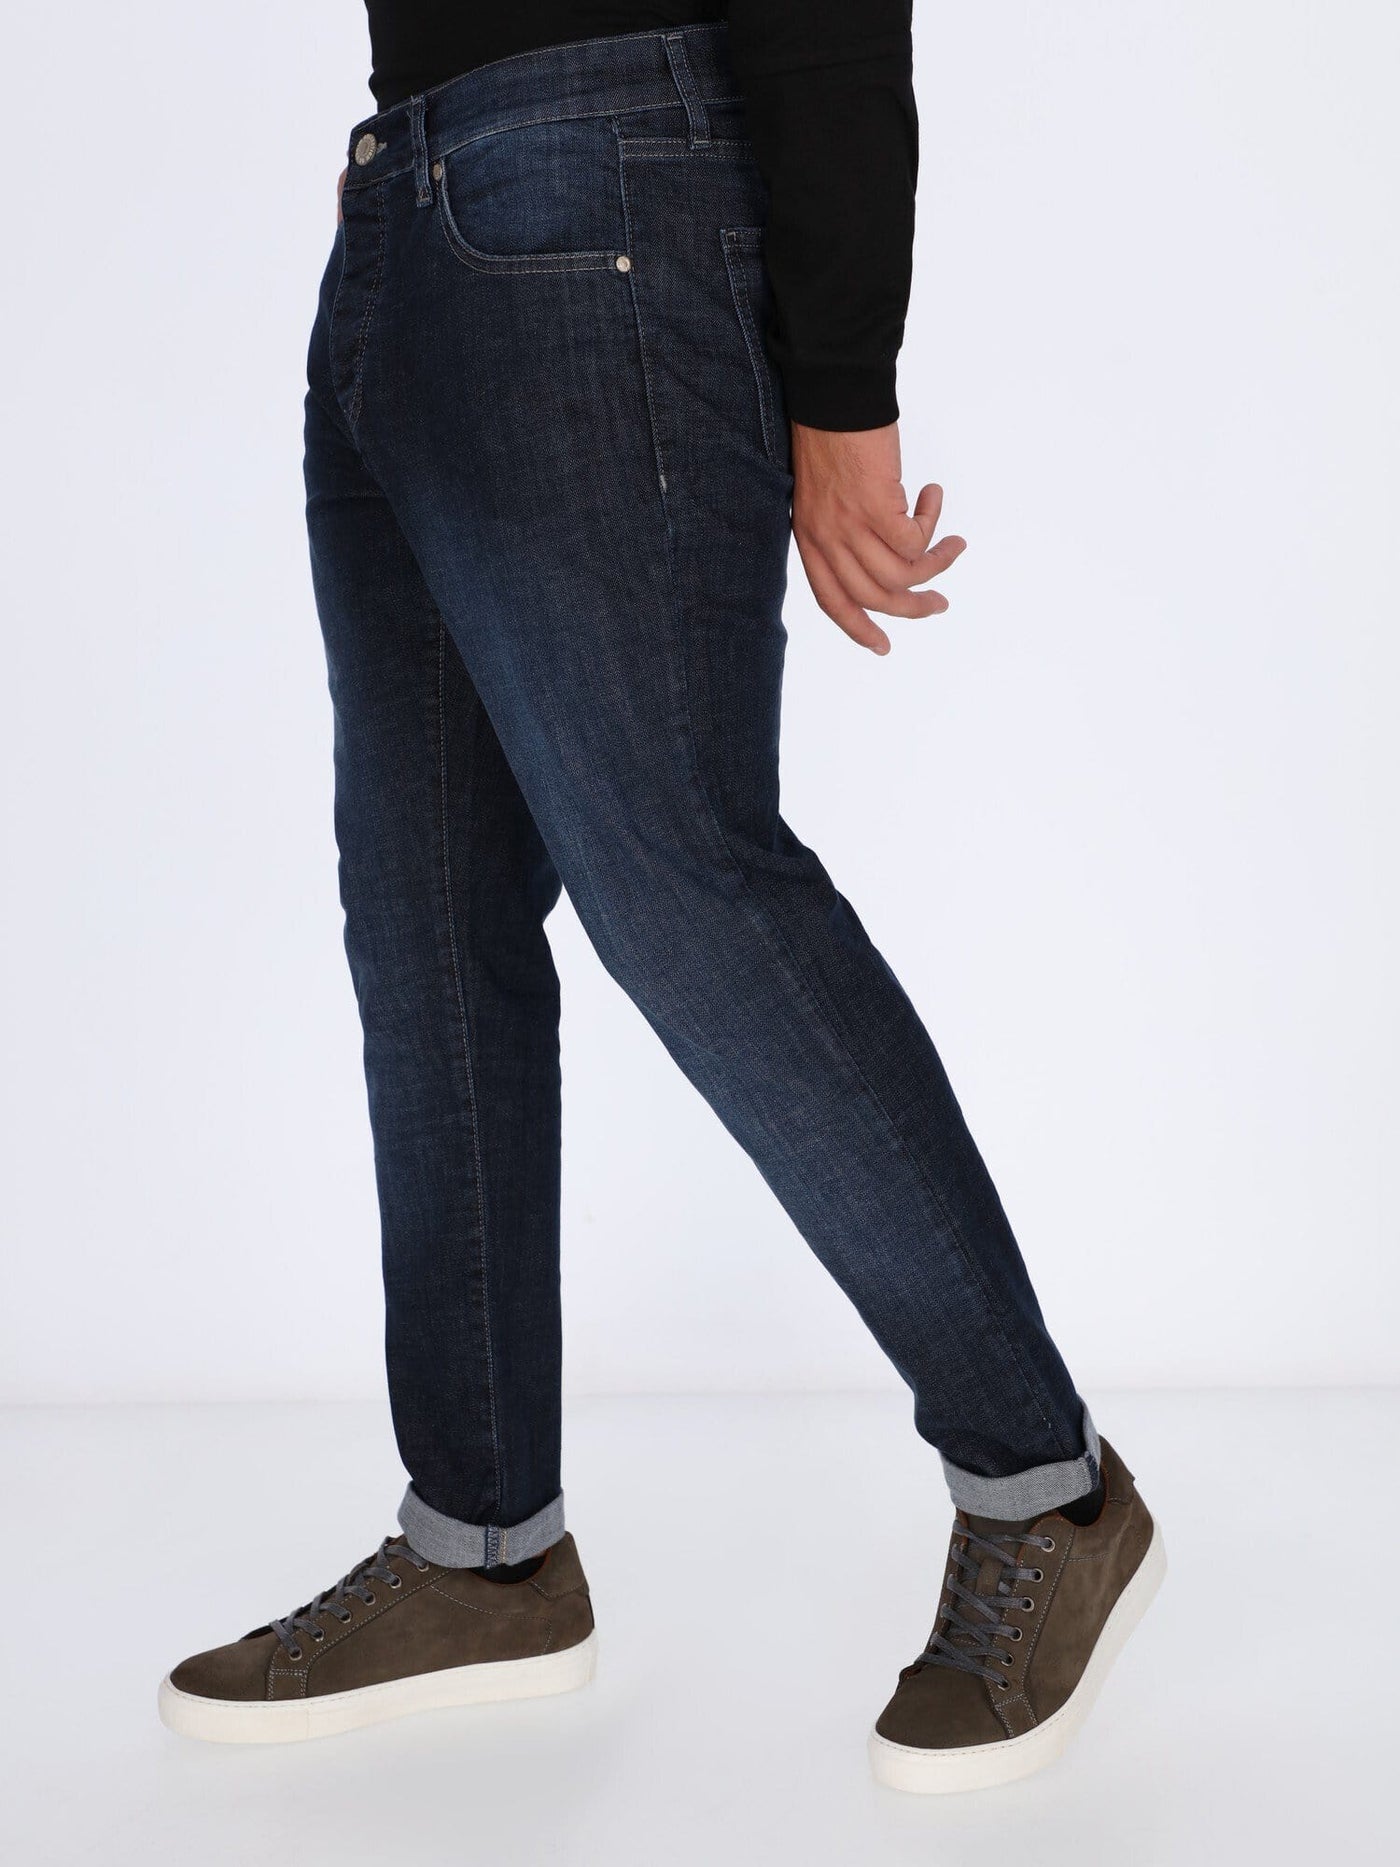 OR Pants & Shorts MR1 / 30 Slim Jeans Pants